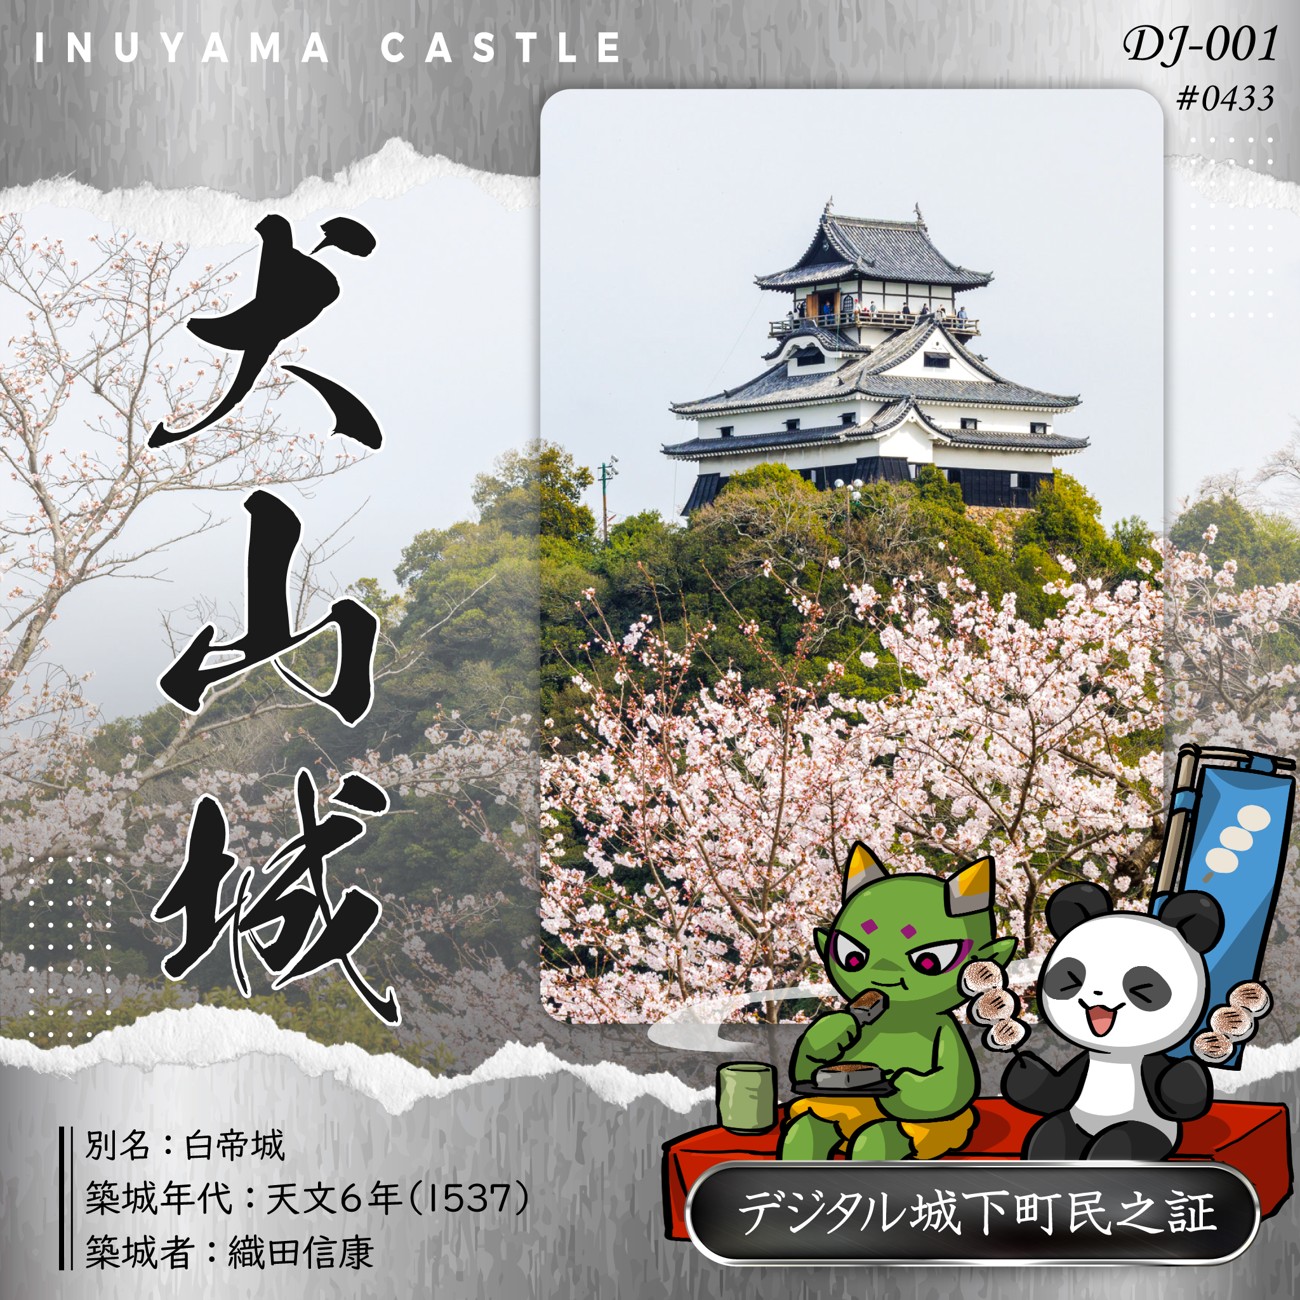 Inuyama Castle #0433